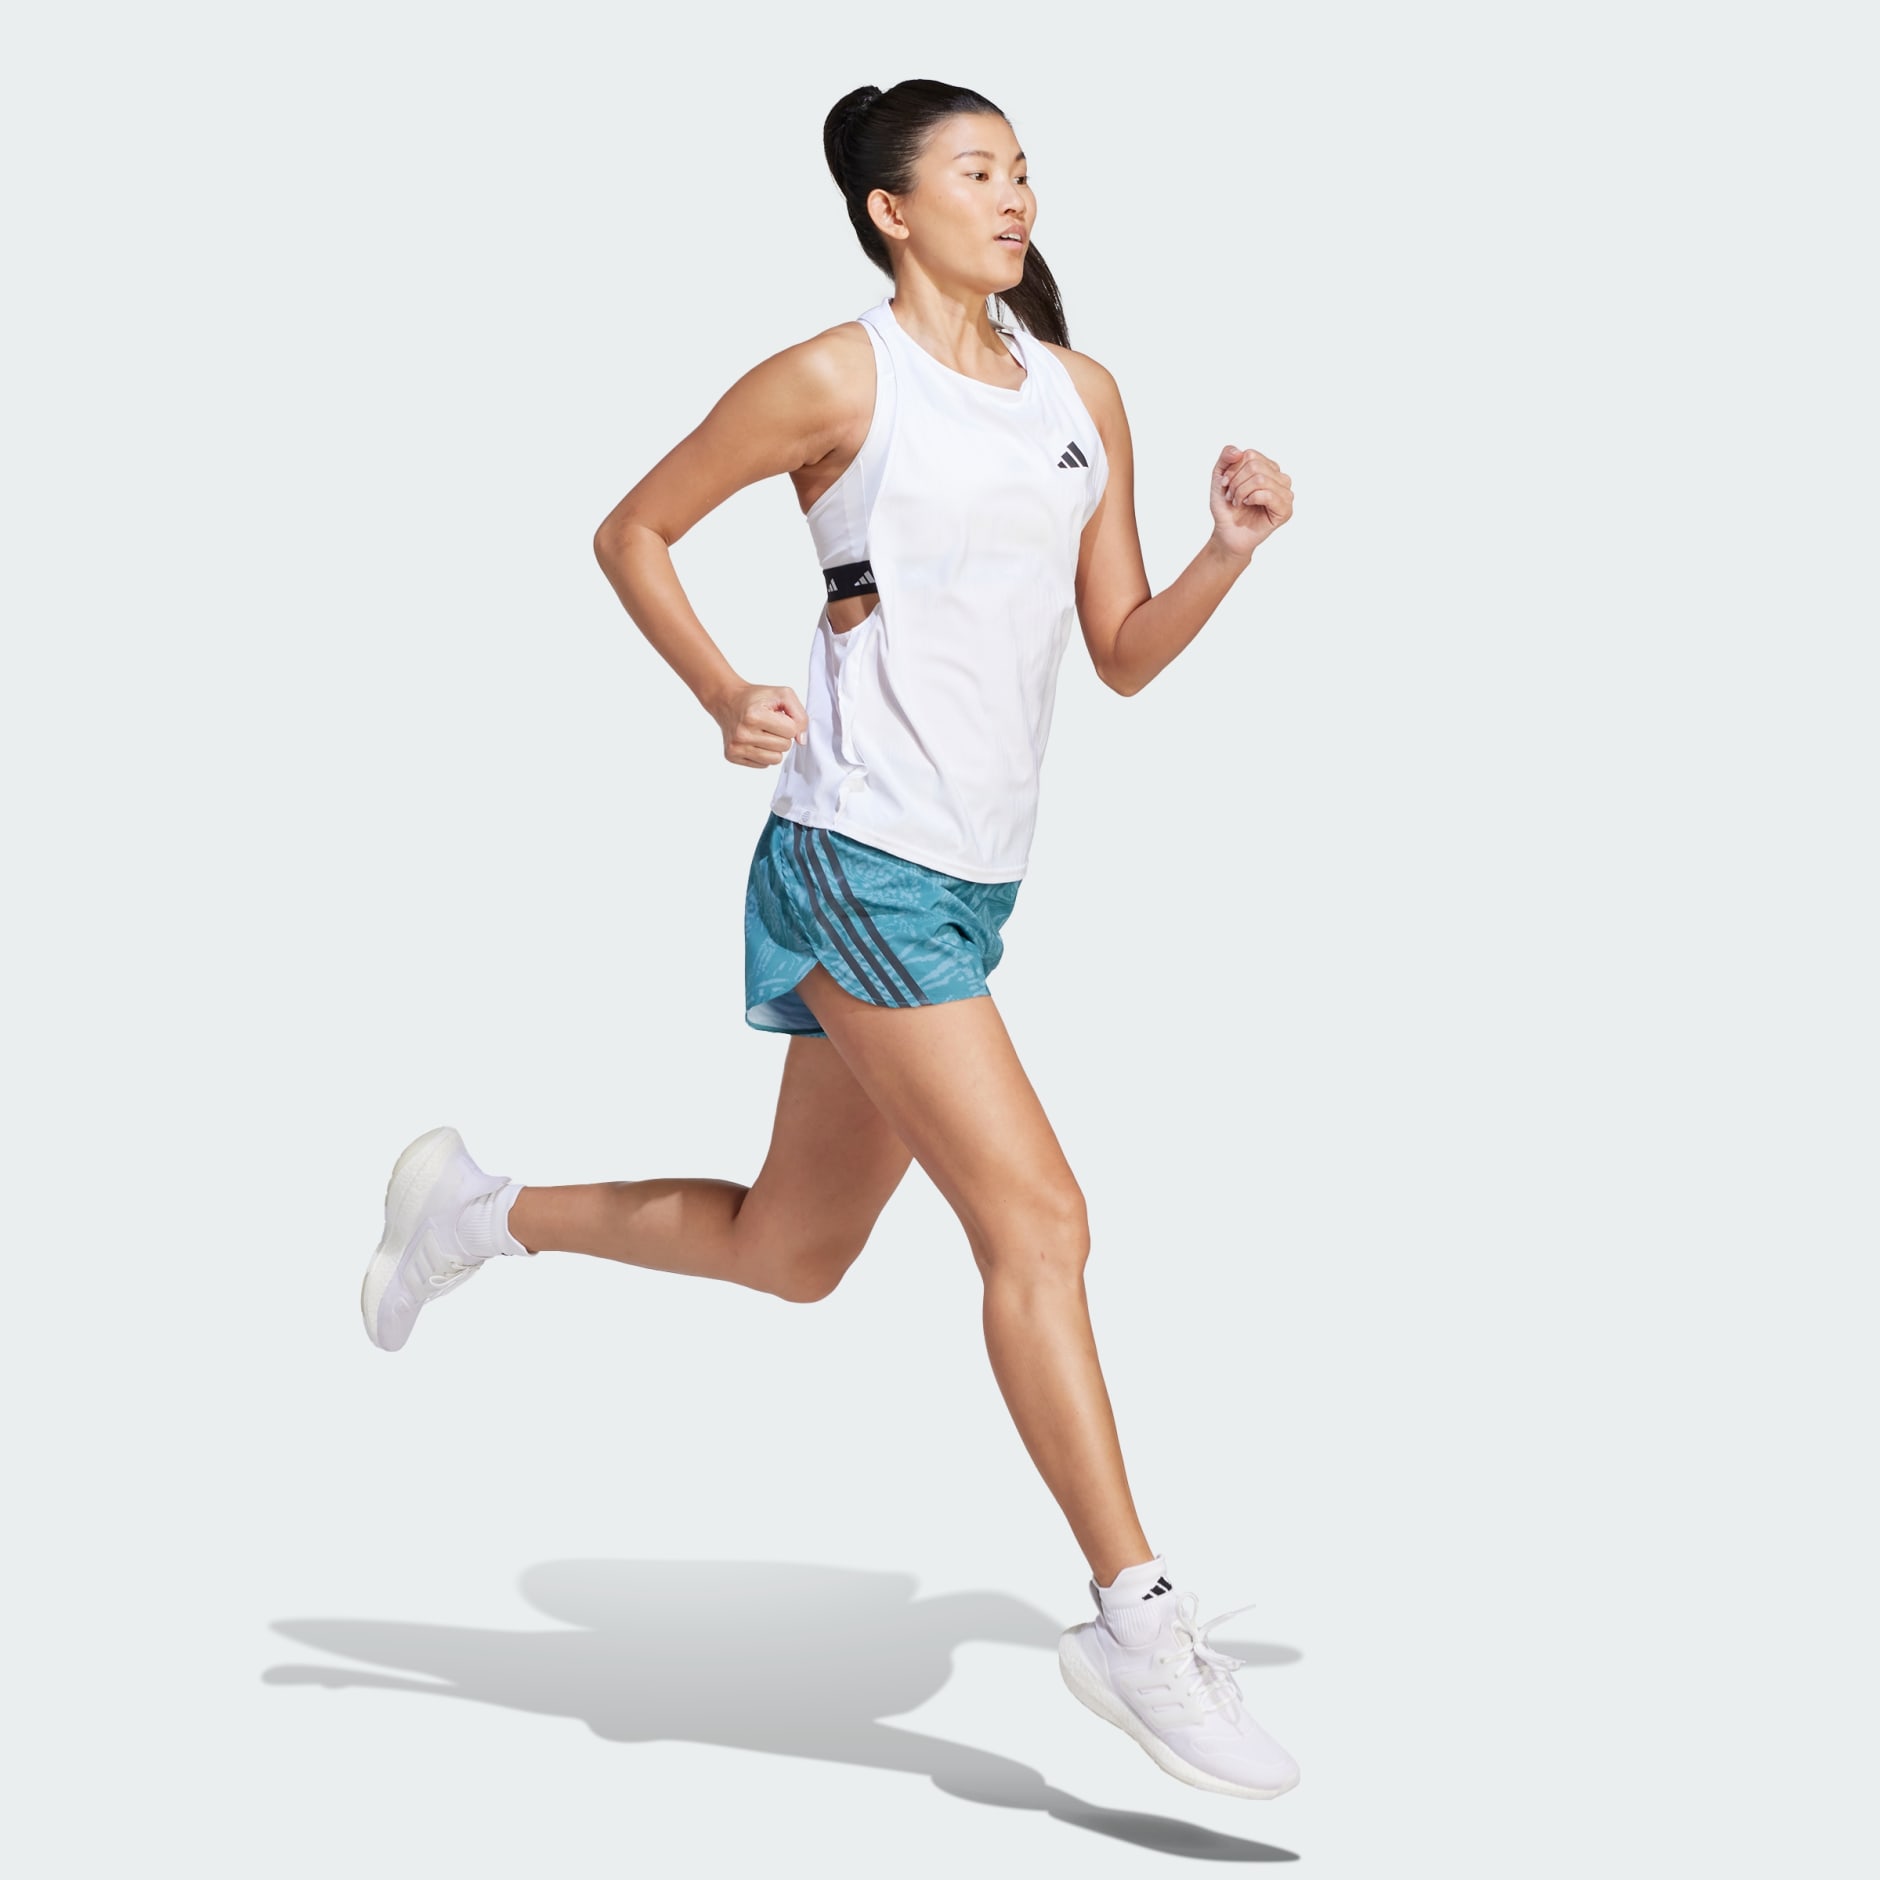 Run Icons 3-Stripes Allover Print Running Shorts